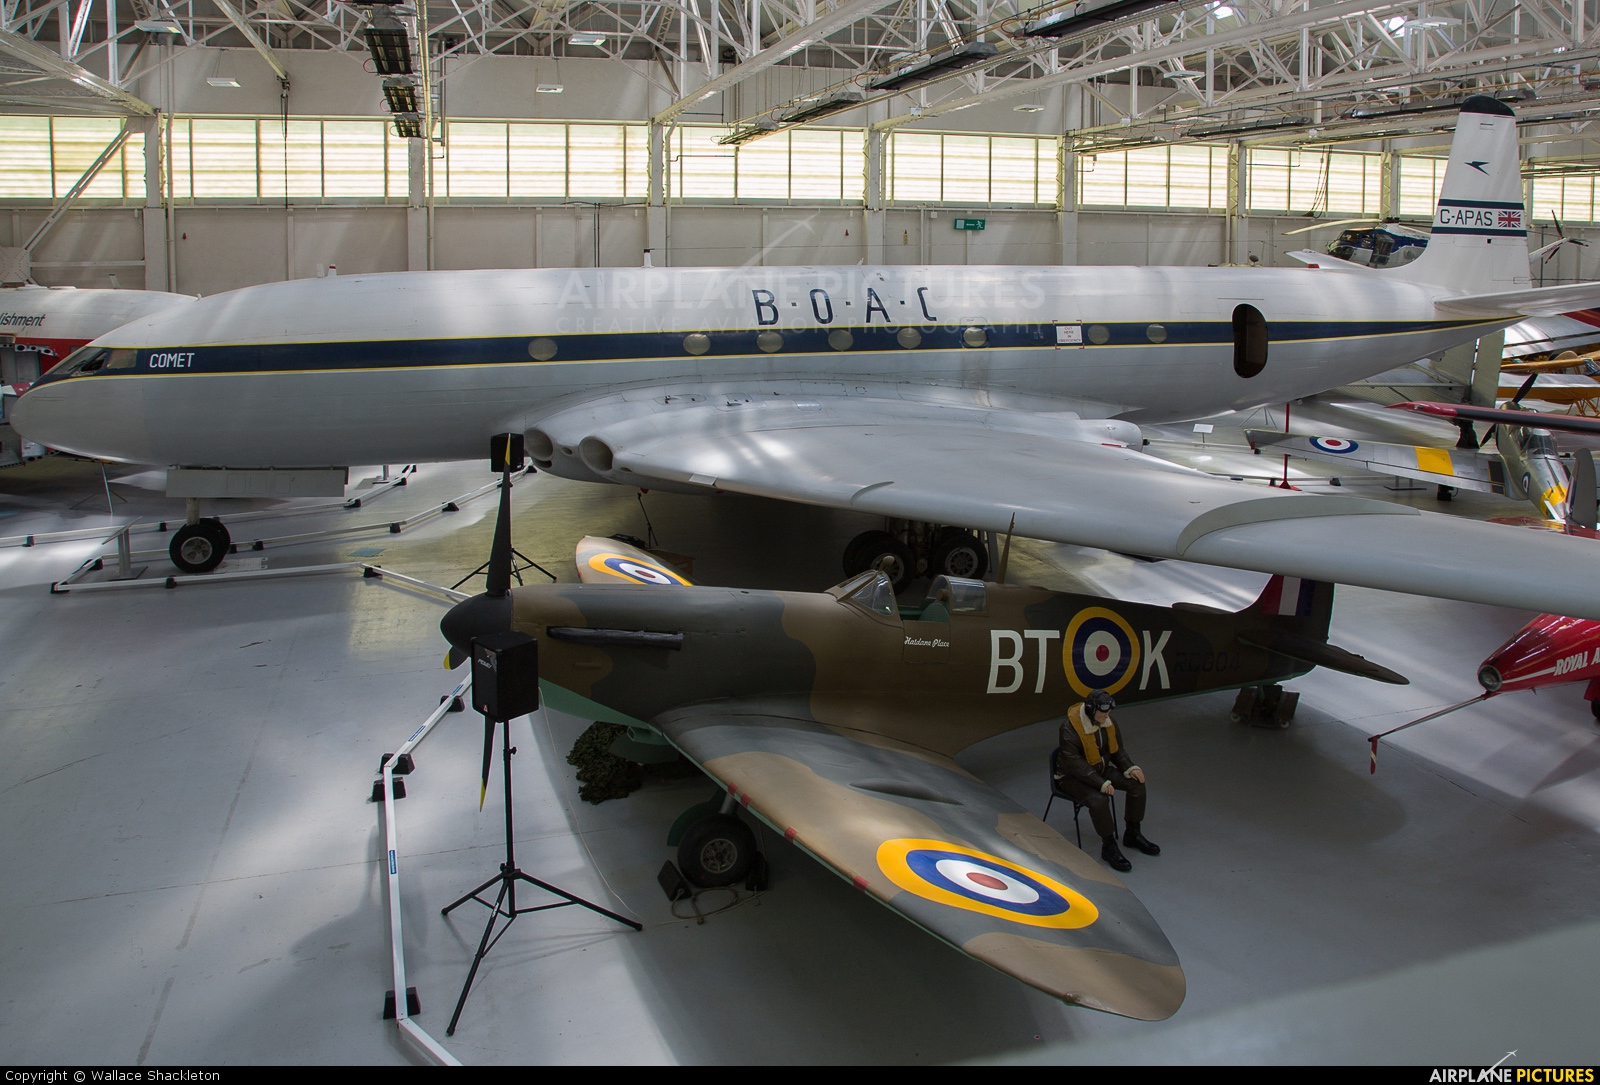 BOAC - British Overseas Airways Corporation G-APAS aircraft at Cosford - RAF Museum